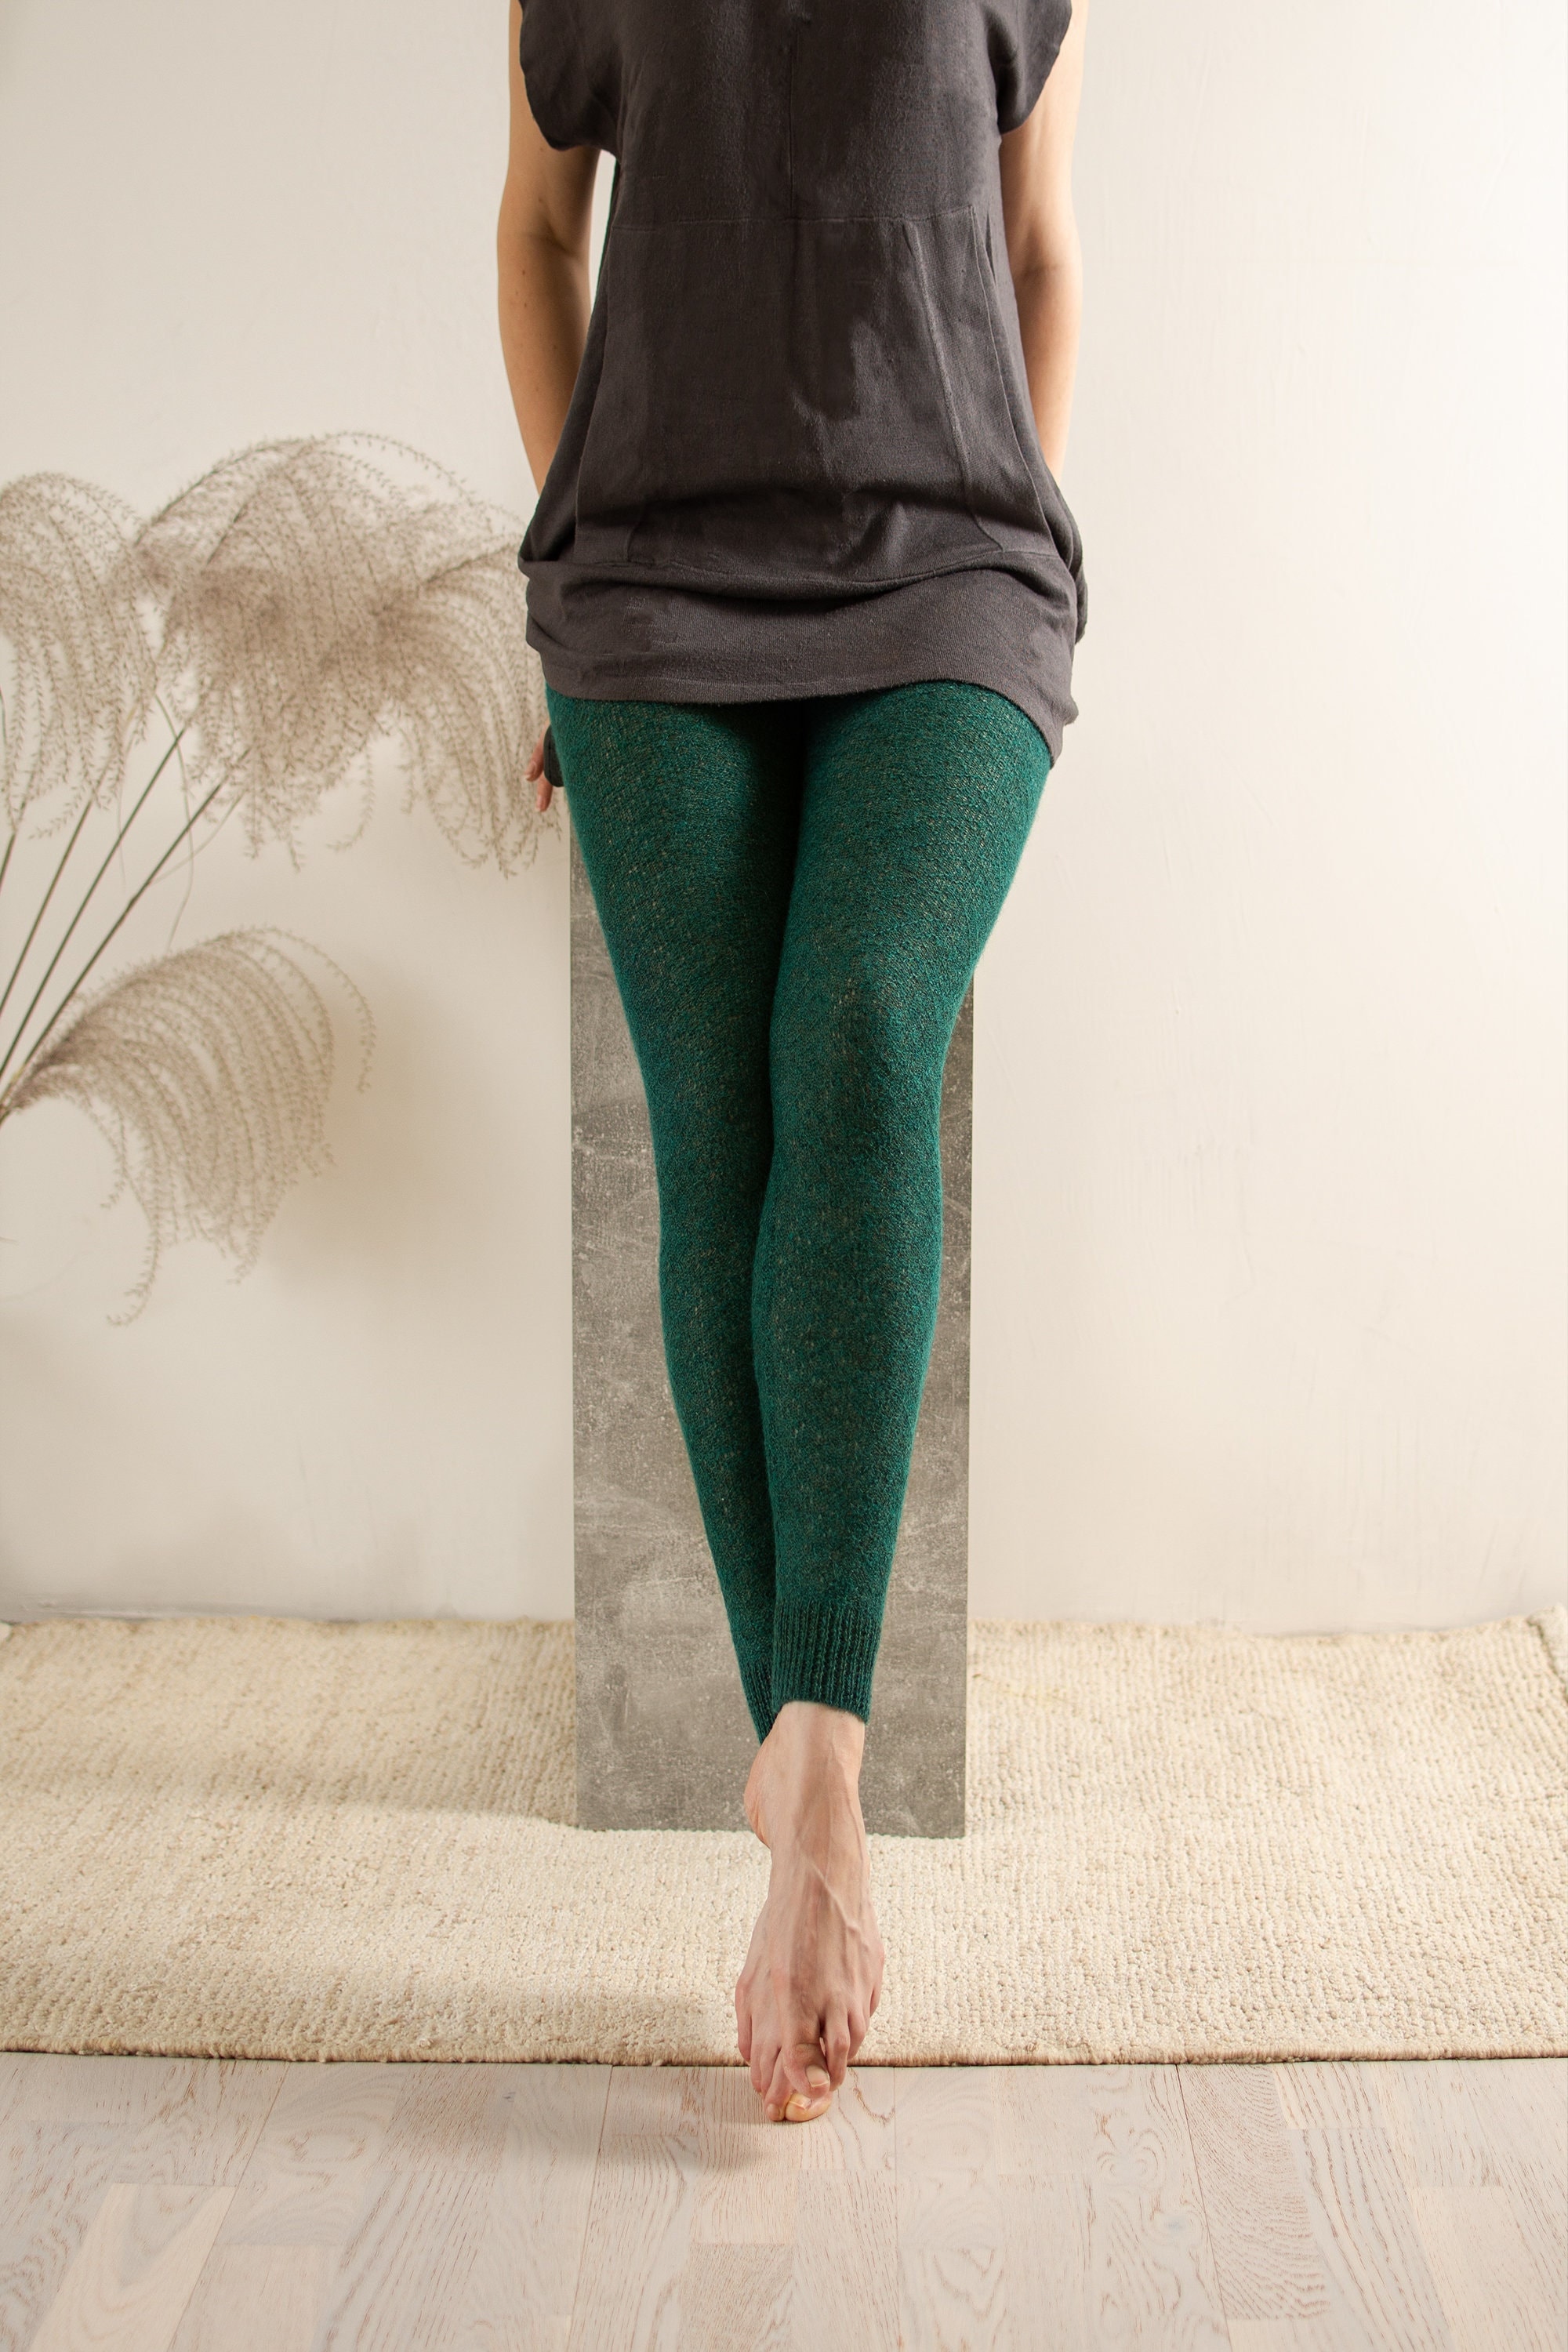 Sheer Yoga Pants Pics